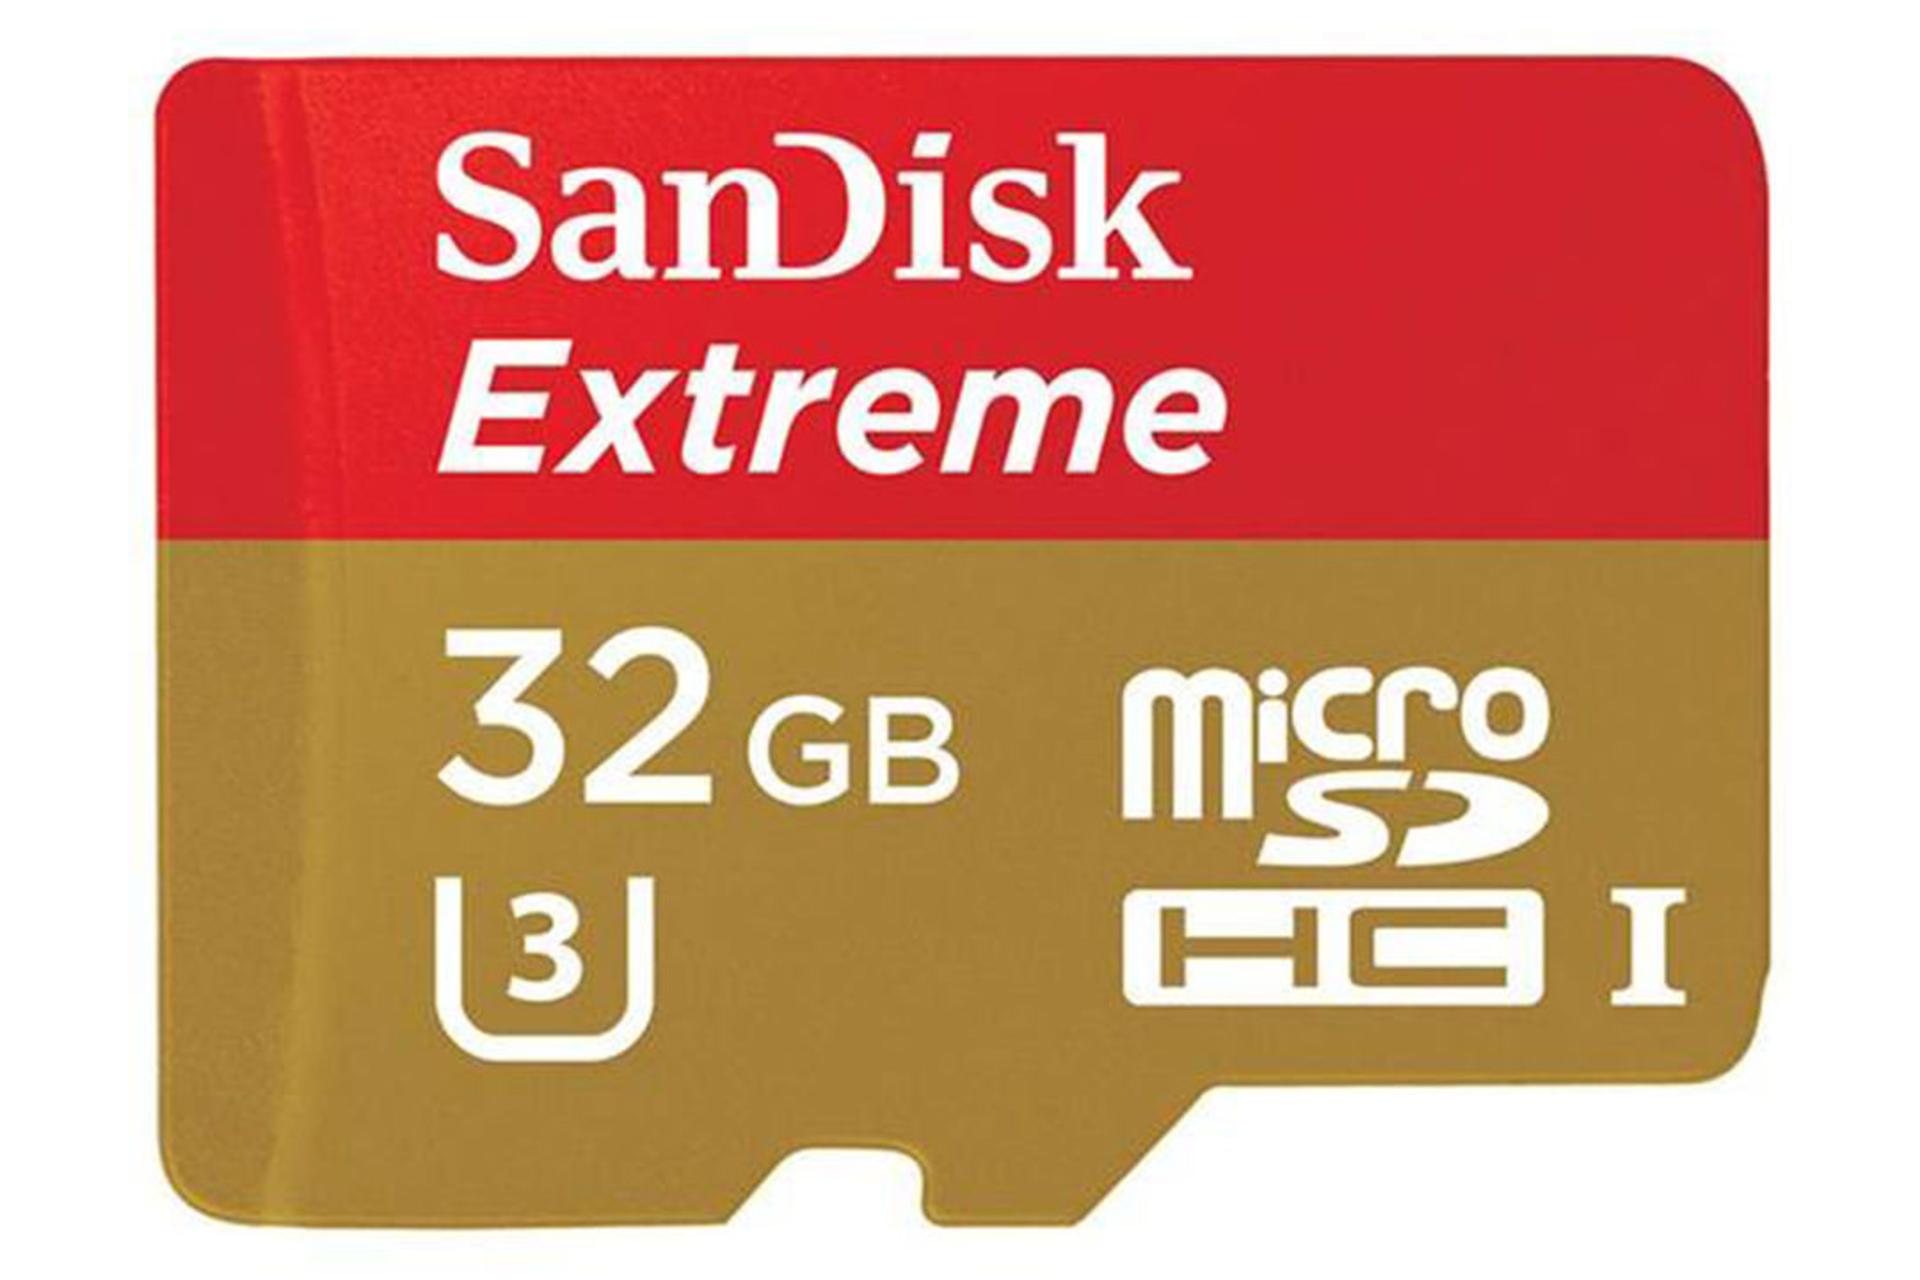 SanDisk Extreme SDHC Class 10 UHS-I U3 32GB